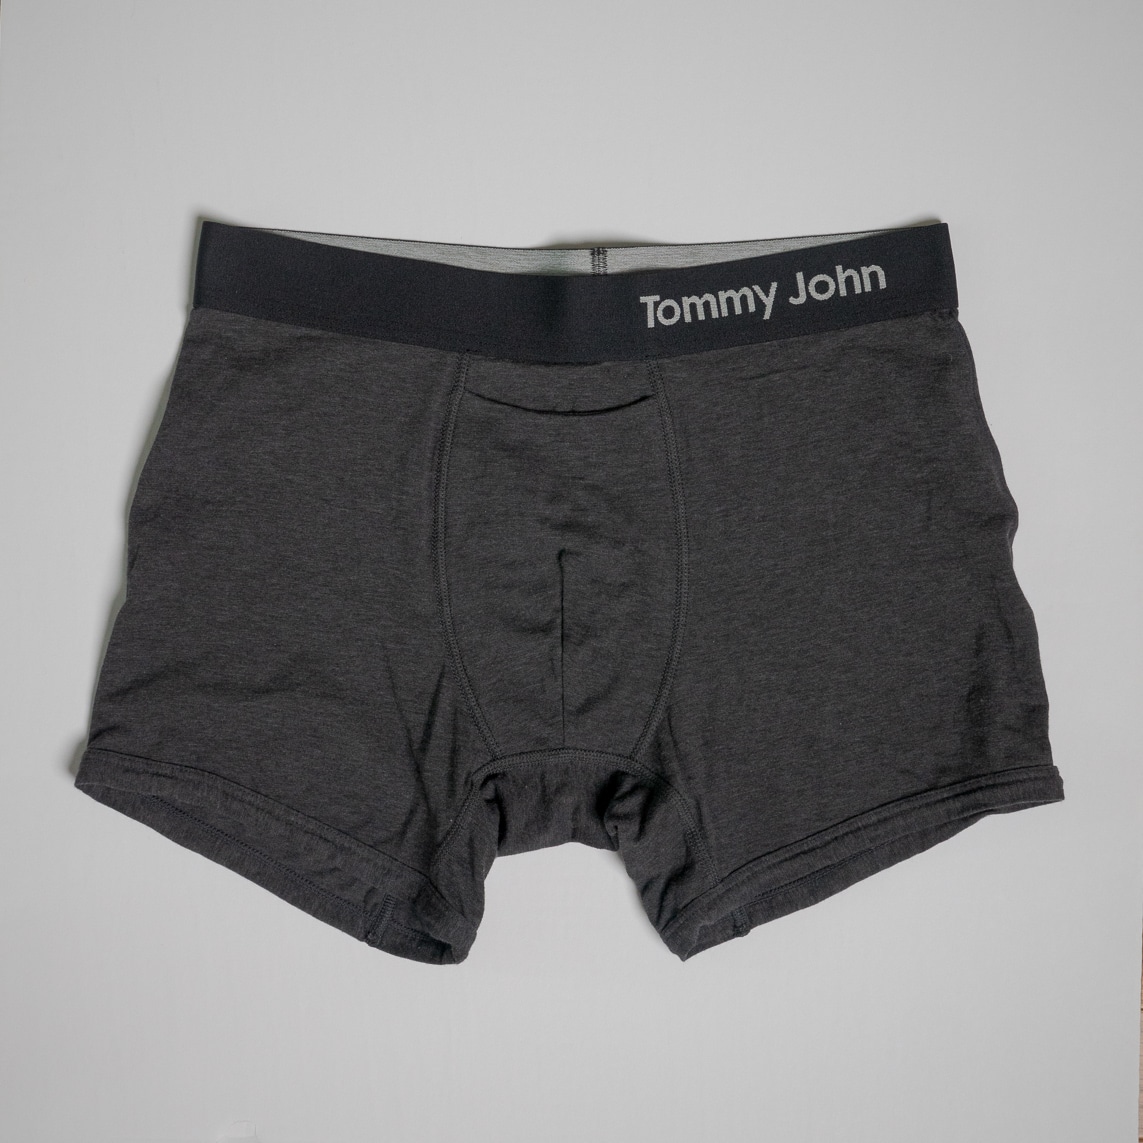 TOMMY JOHN Black Cotton Basics Hammock Pouch 8 Boxer Brief Underwear MEDIUM  NWT